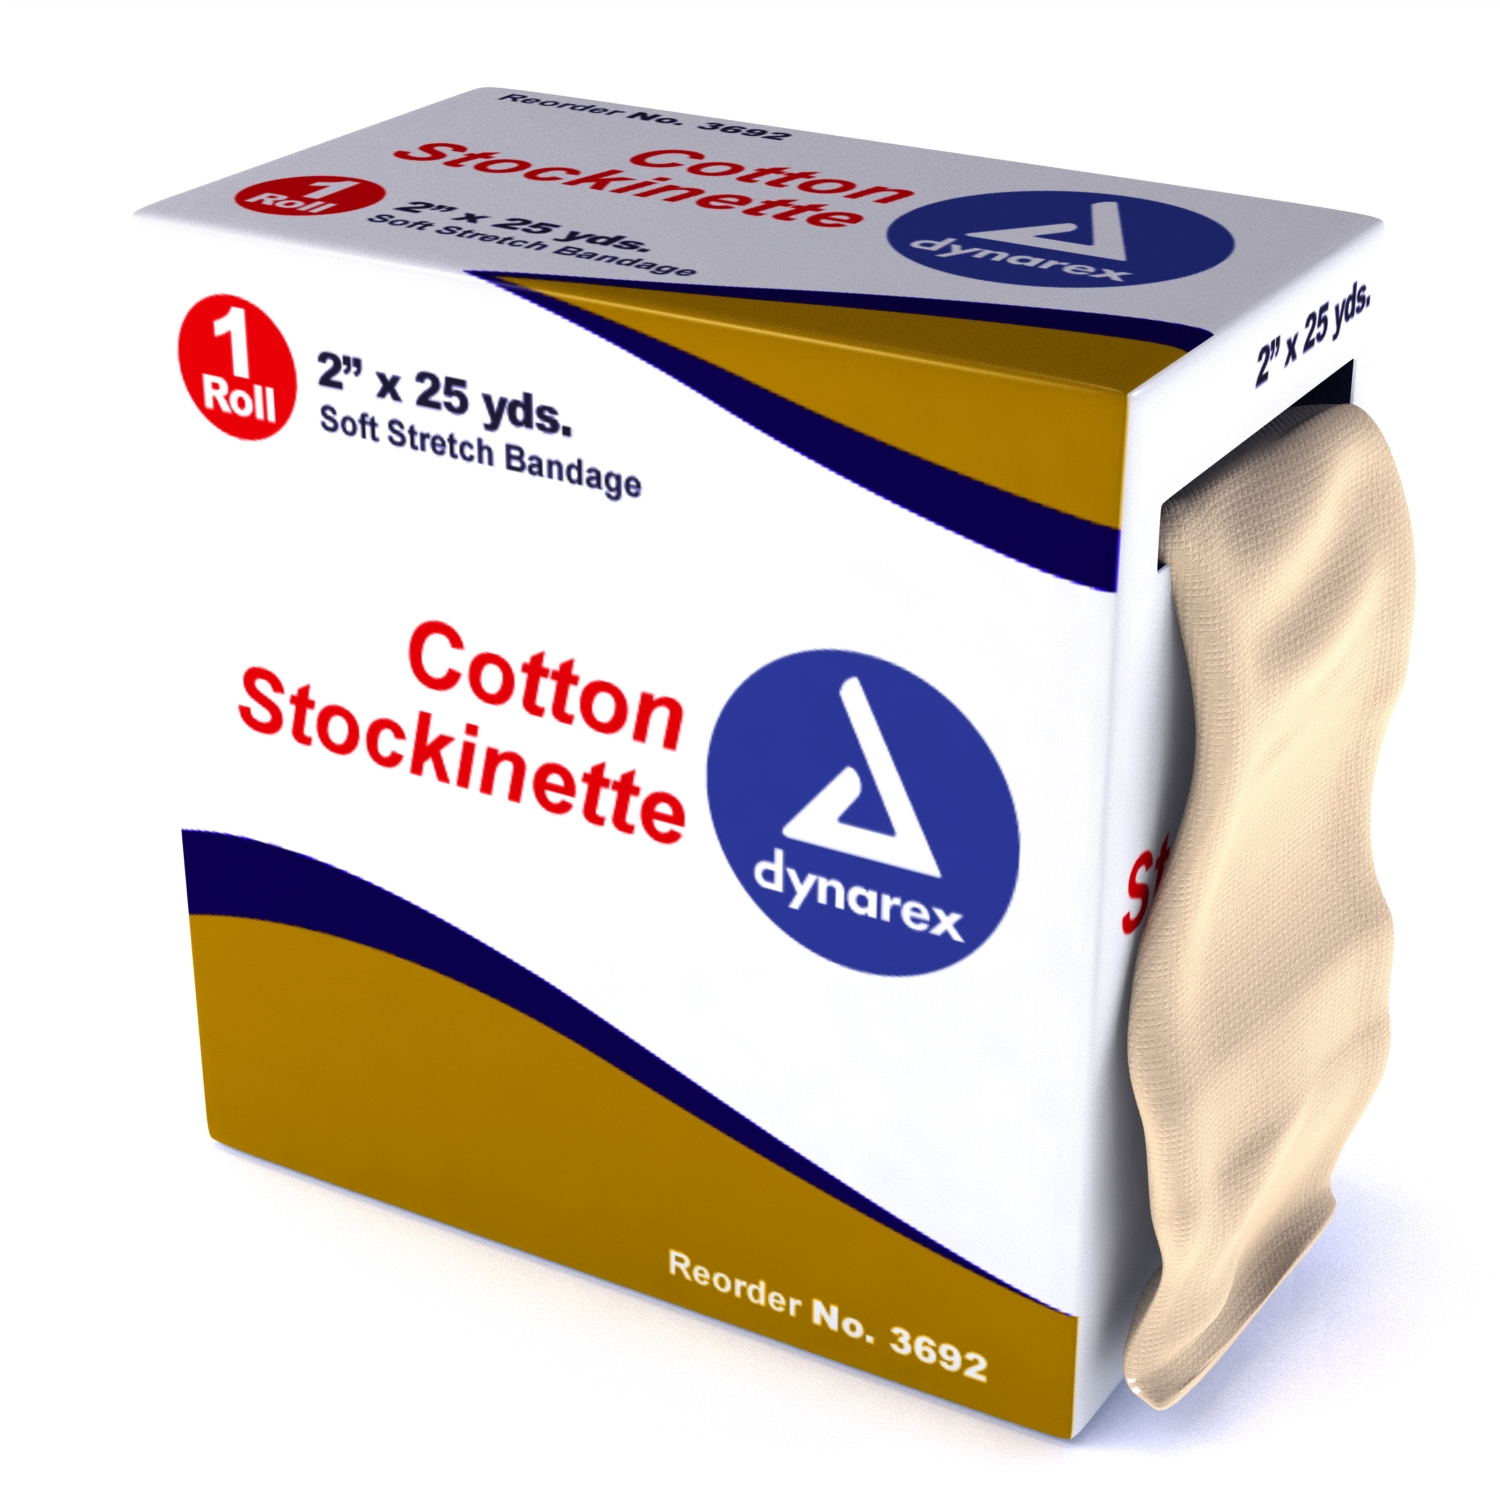 Cotton Stockinette - 2" x 25 yds